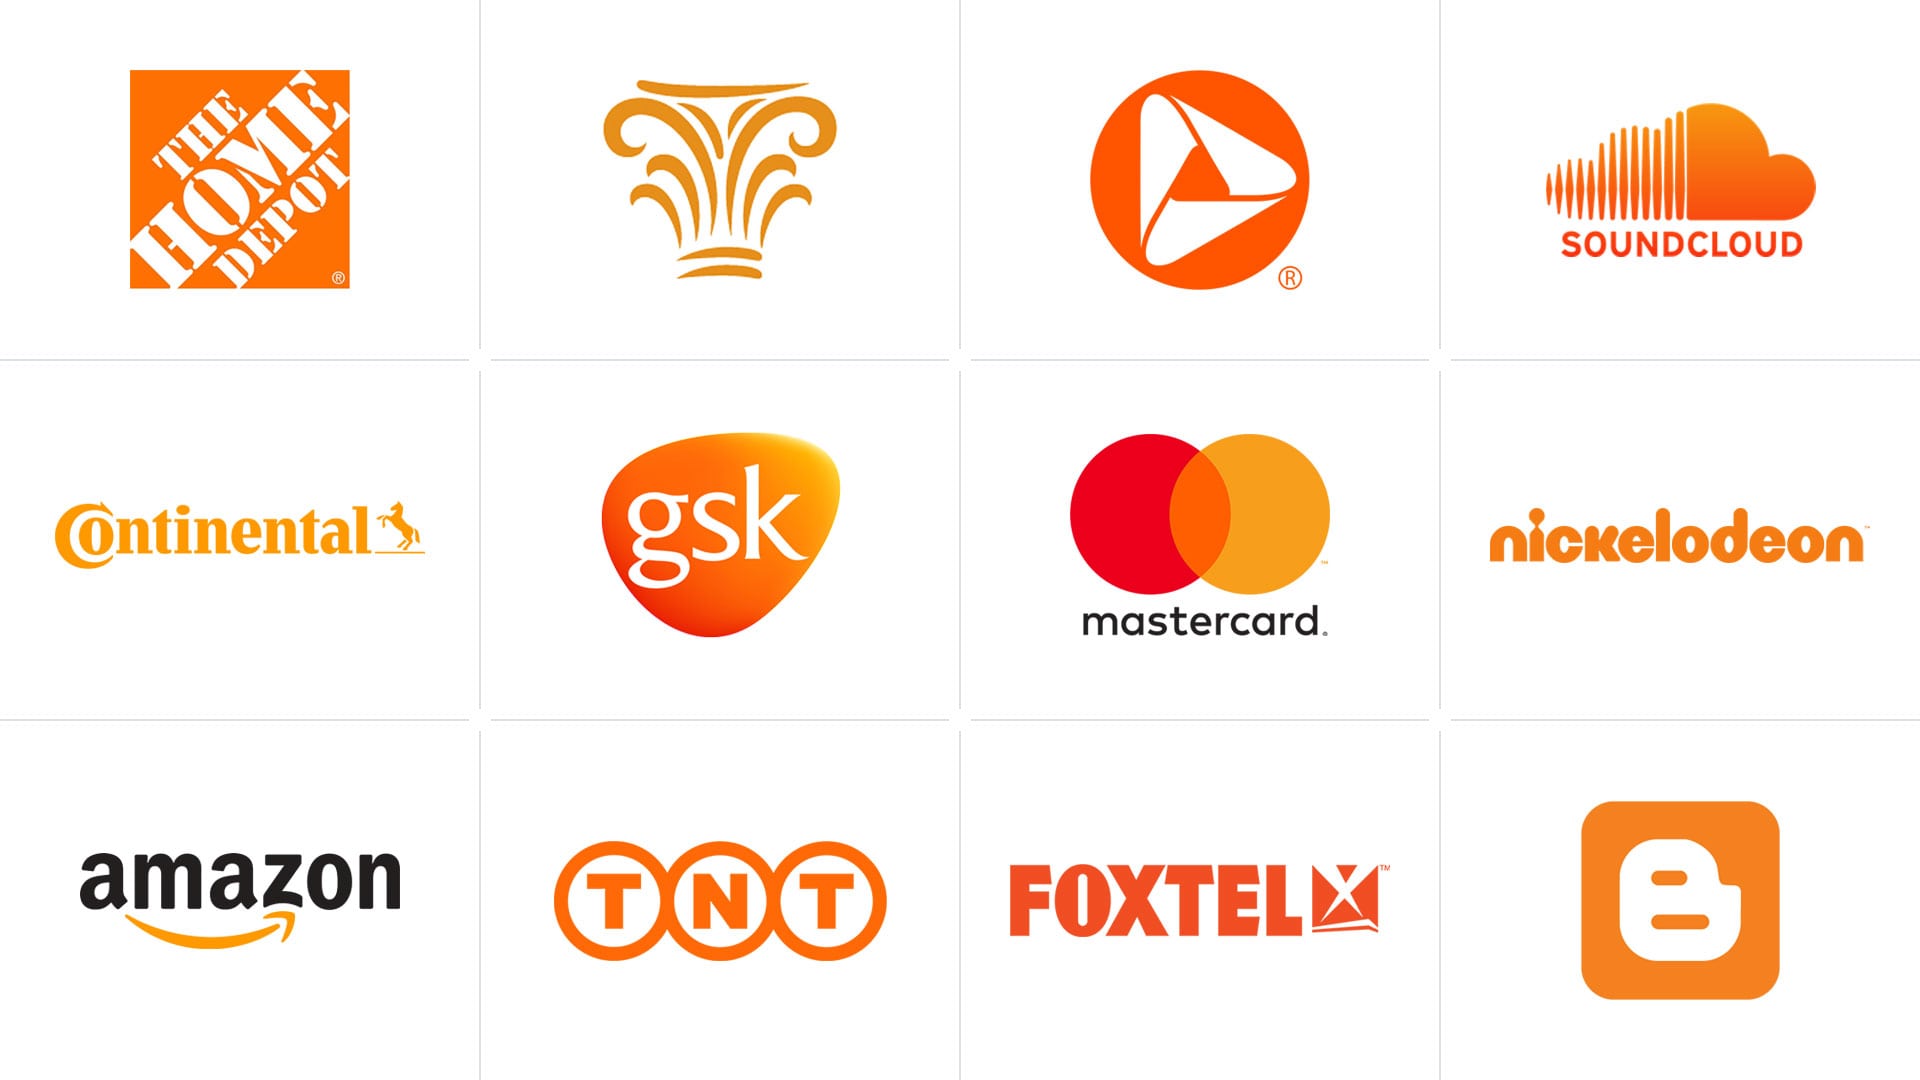 Orange Color Usage Examples in Popular Logos